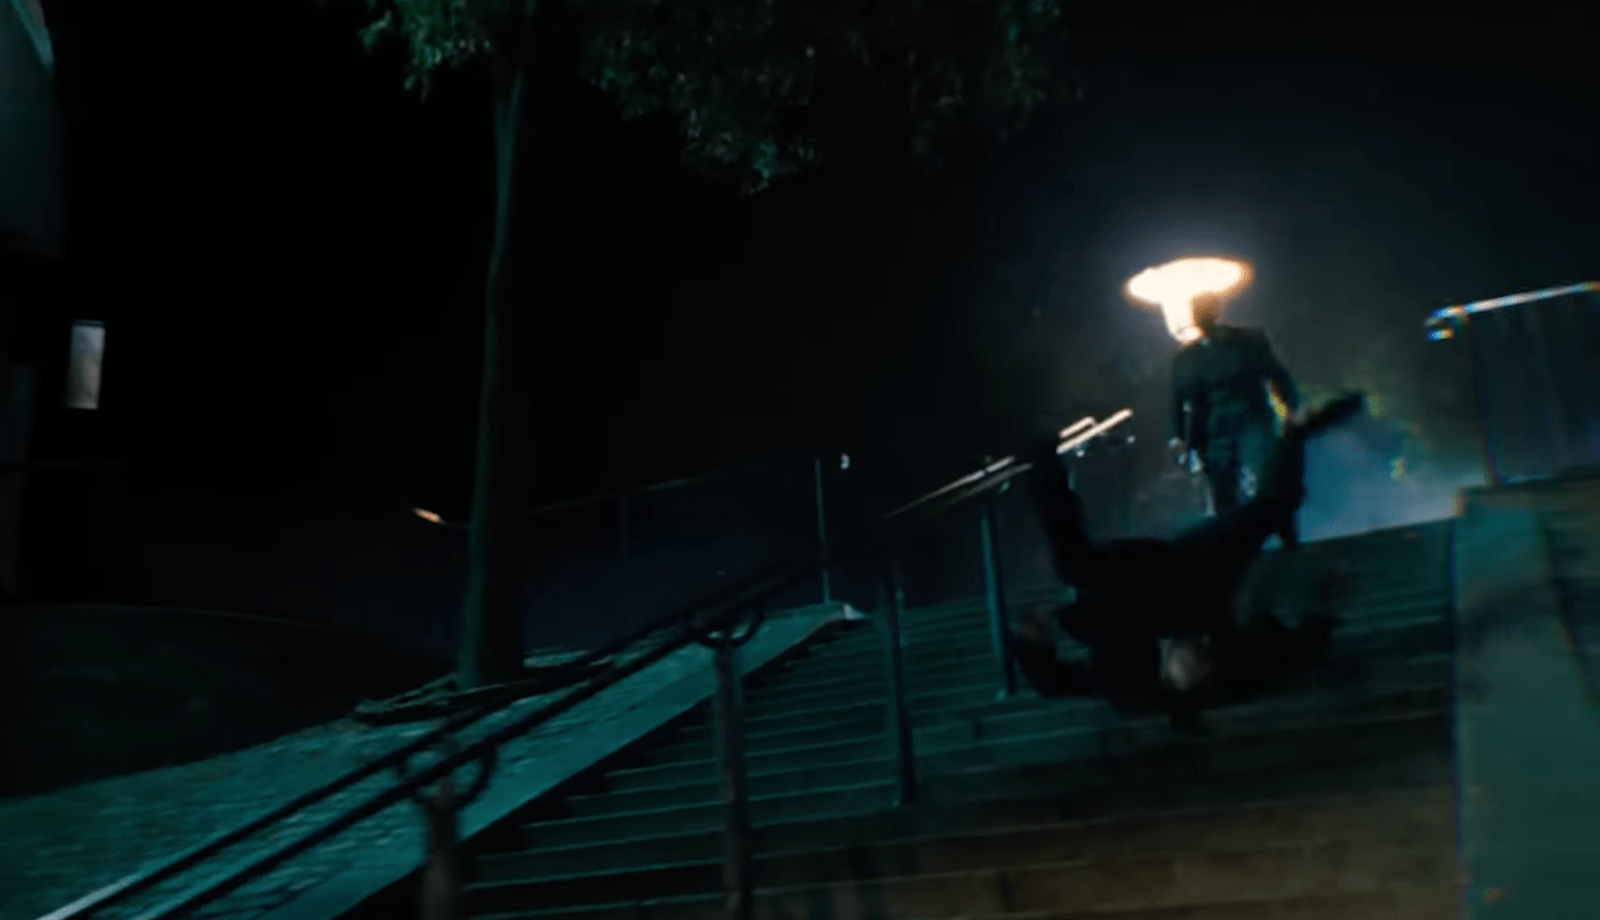 John Wick falling down some stairs